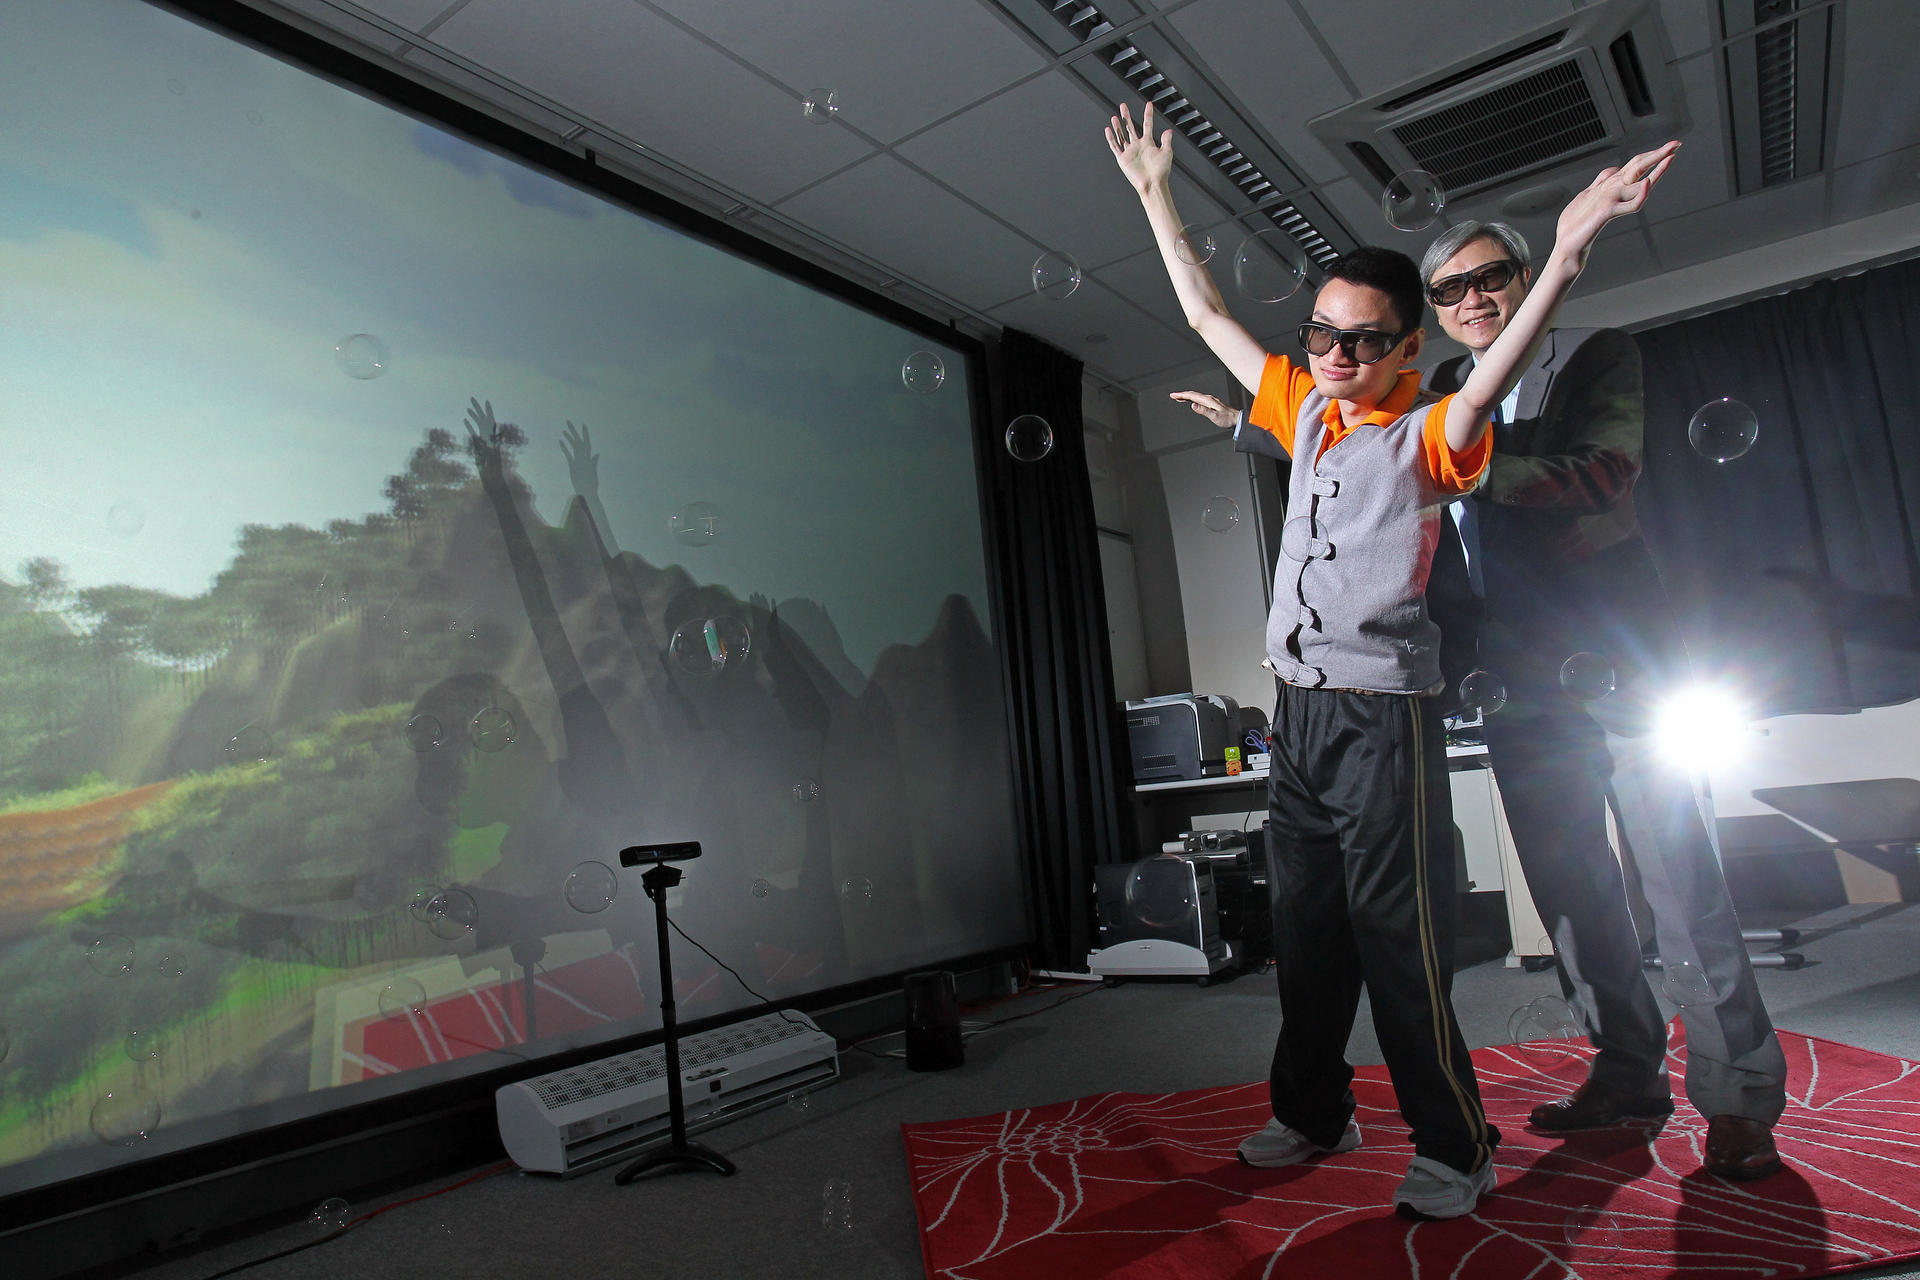 Man Wai-ho on the 3D flying carpet with Professor Ip. Photos: May Tse